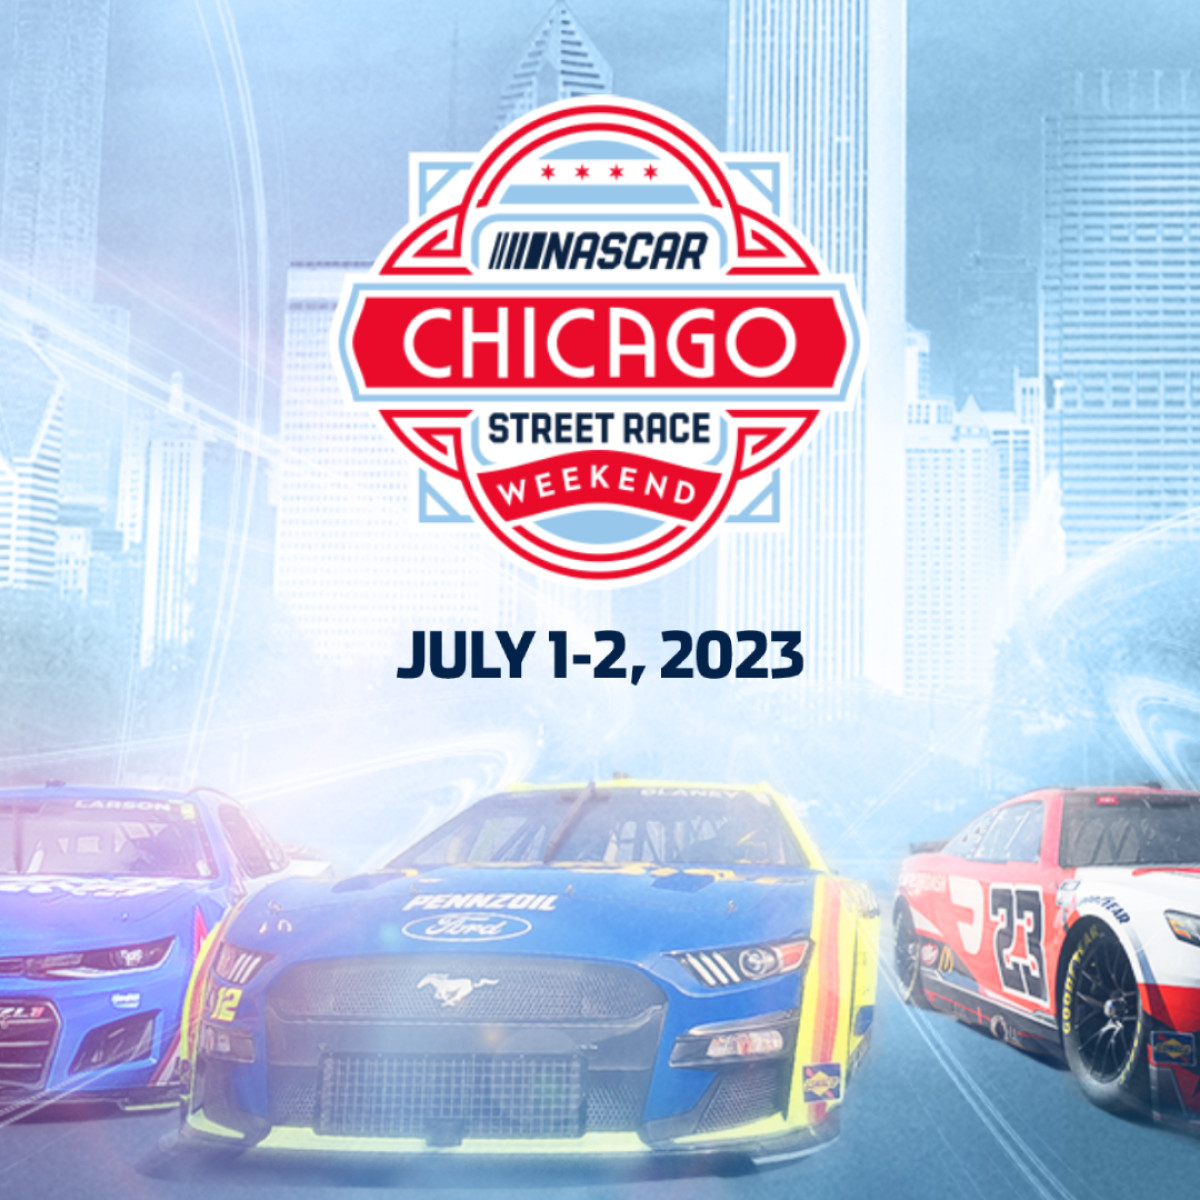 NASCAR Chicago Street Race Weekend